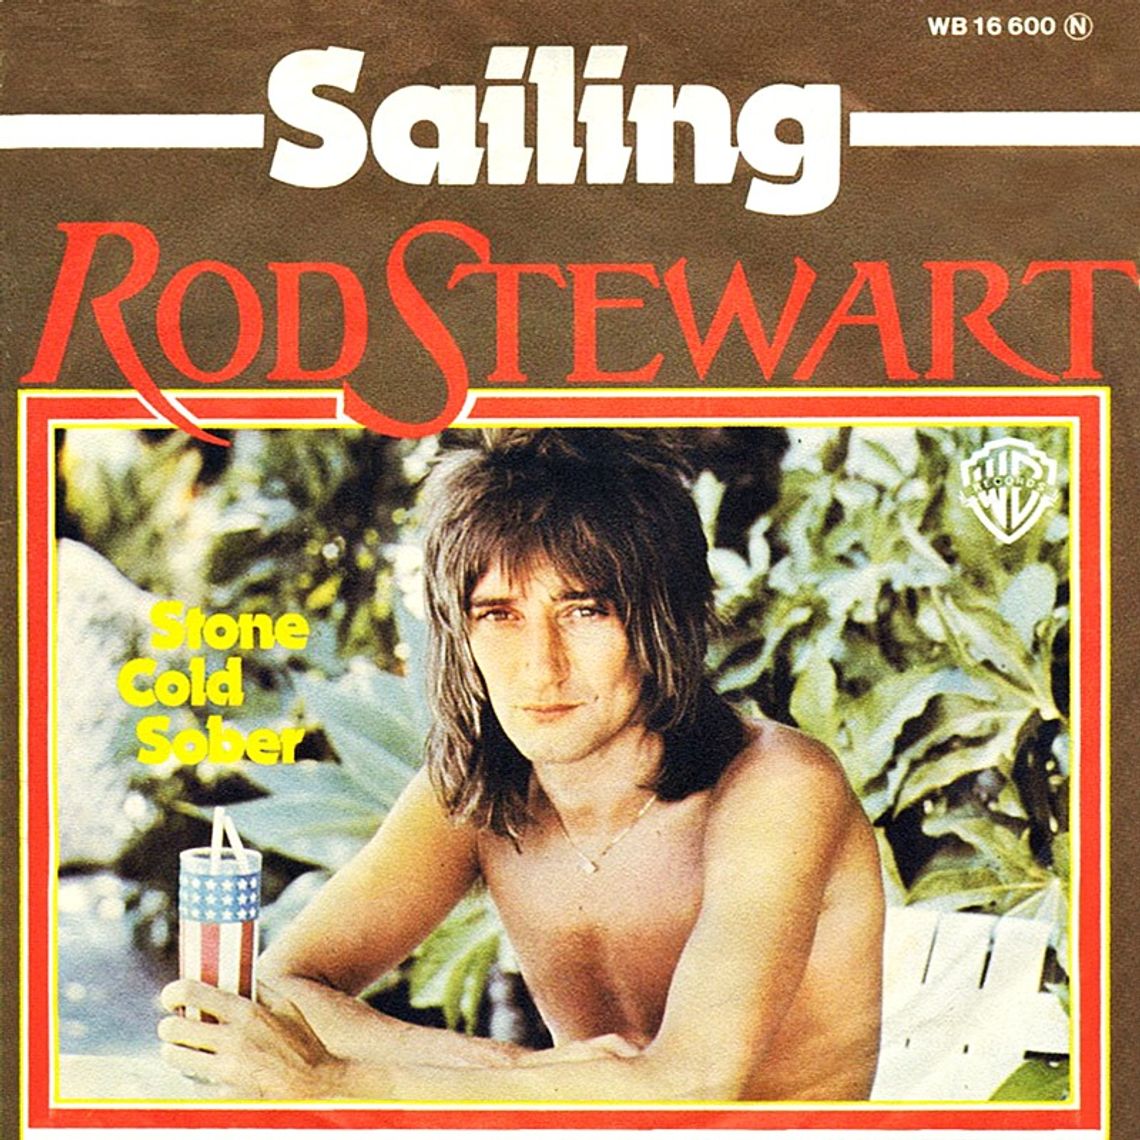 Rod Stewart "Sailing"